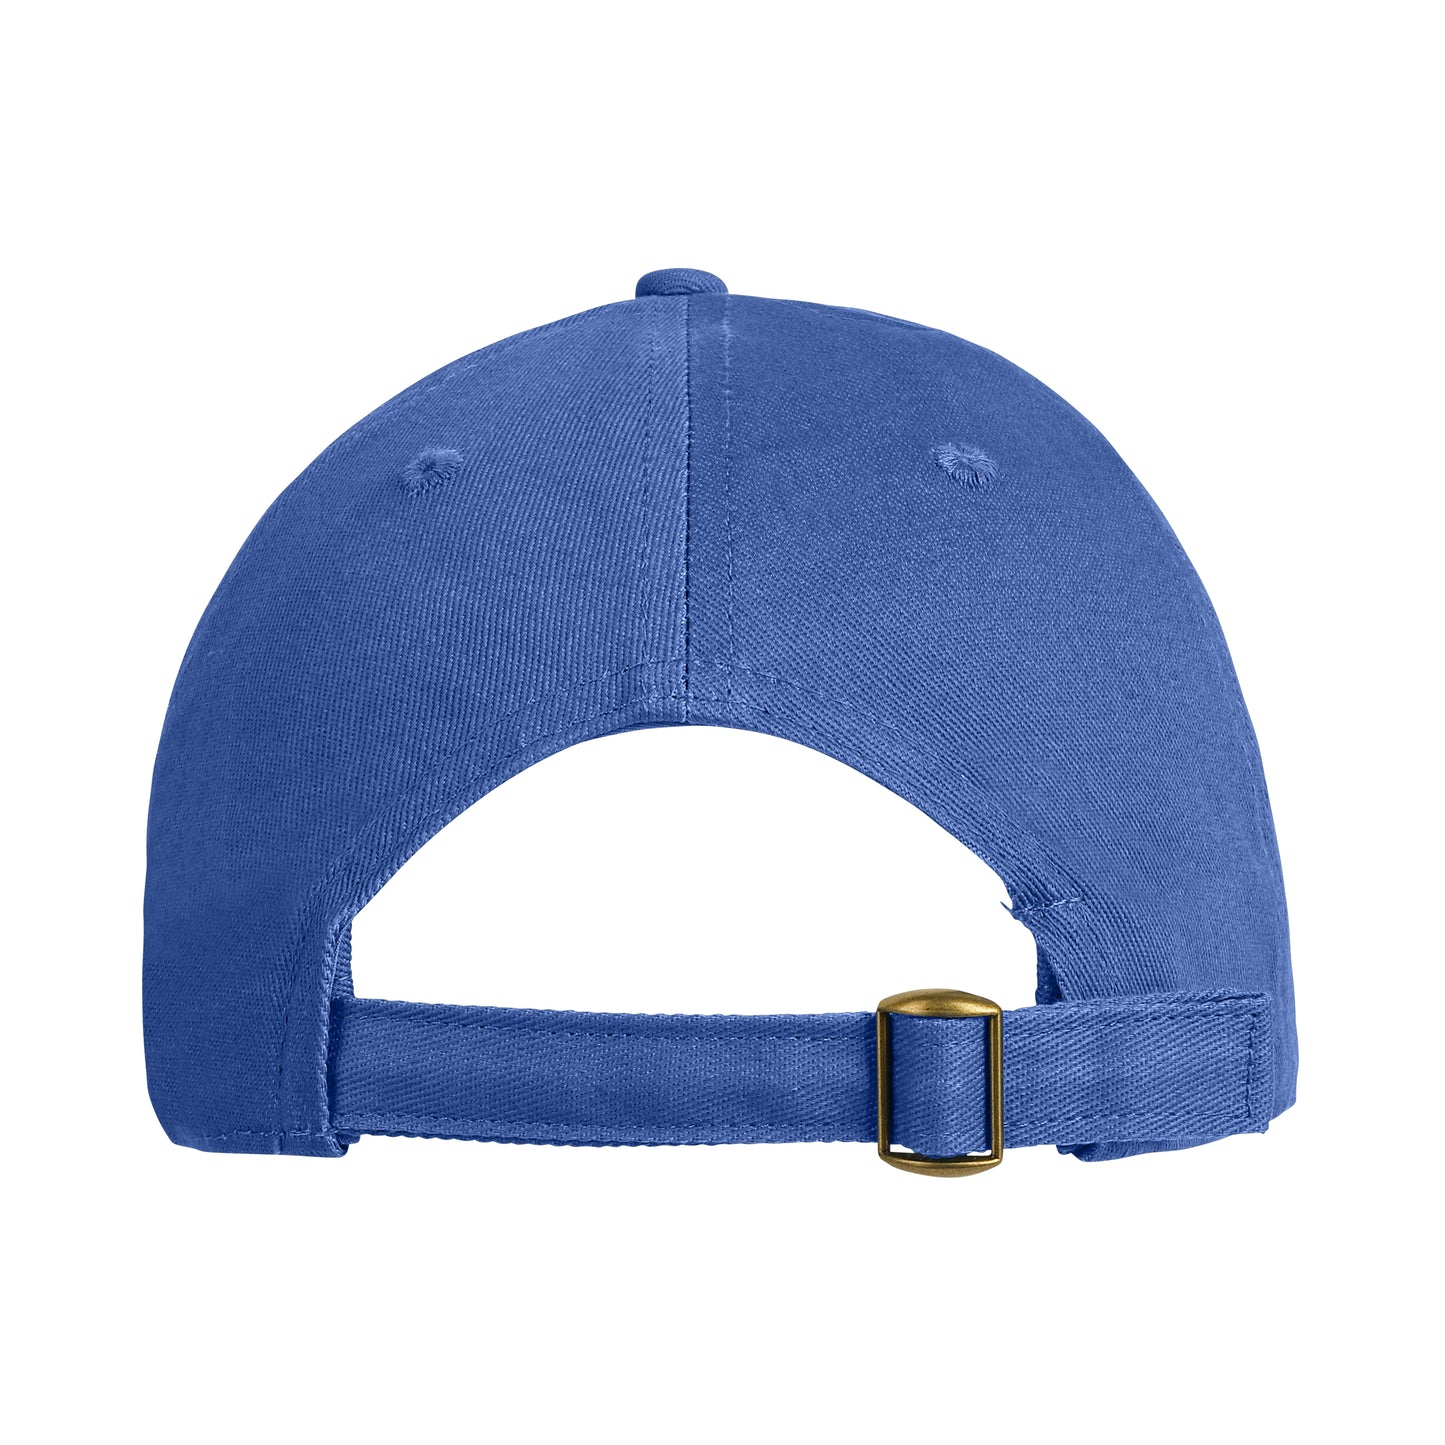 COMBIDEAL O.Leo baseballcap Blauw met Wit & MyTech Earbuds